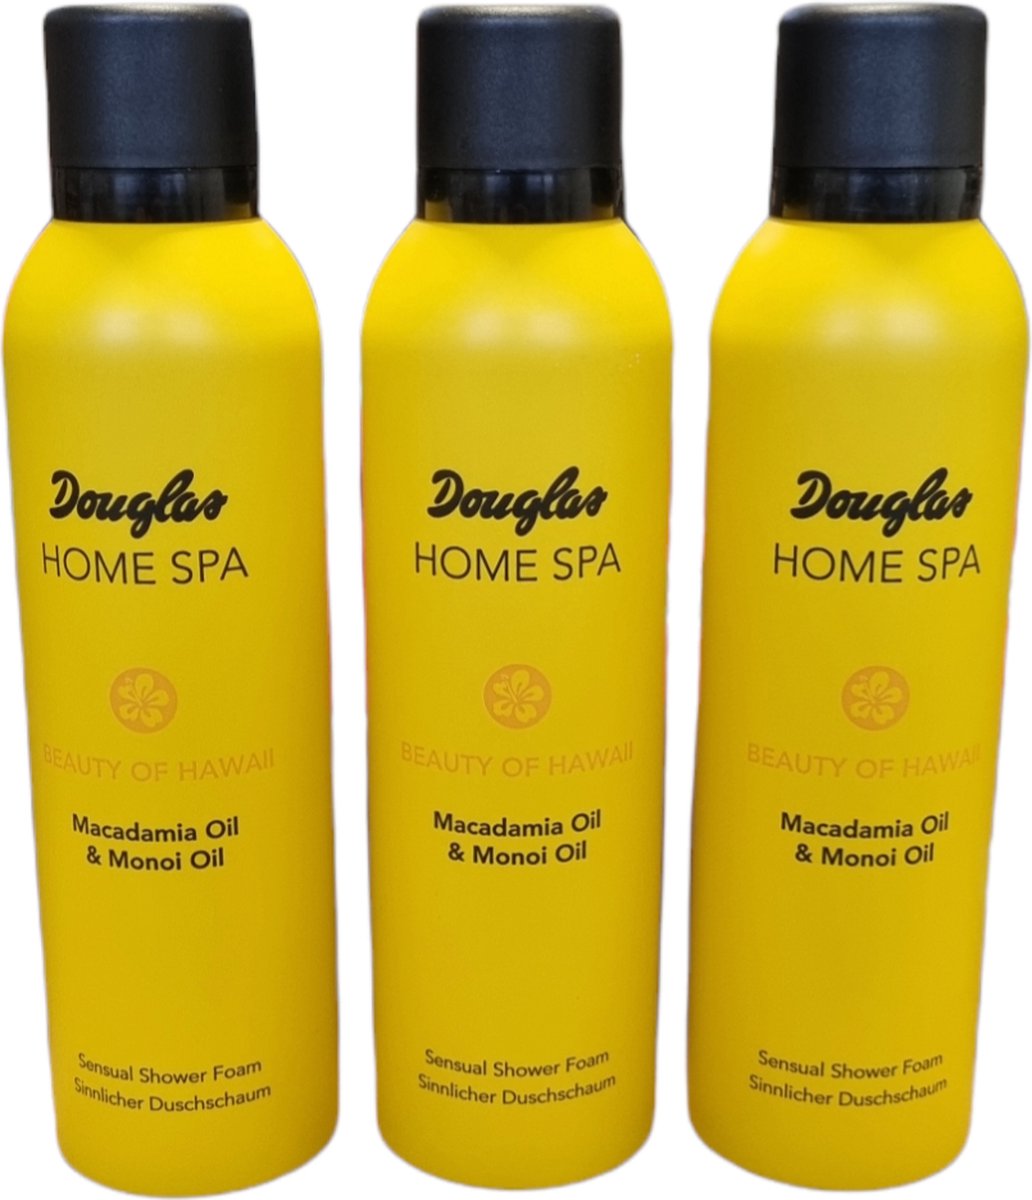 3 Stuks Douglas Home spa Beauty of Hawaii - Macadamia Oil & Monoi Oil - Sensual Shower foam 200 ml